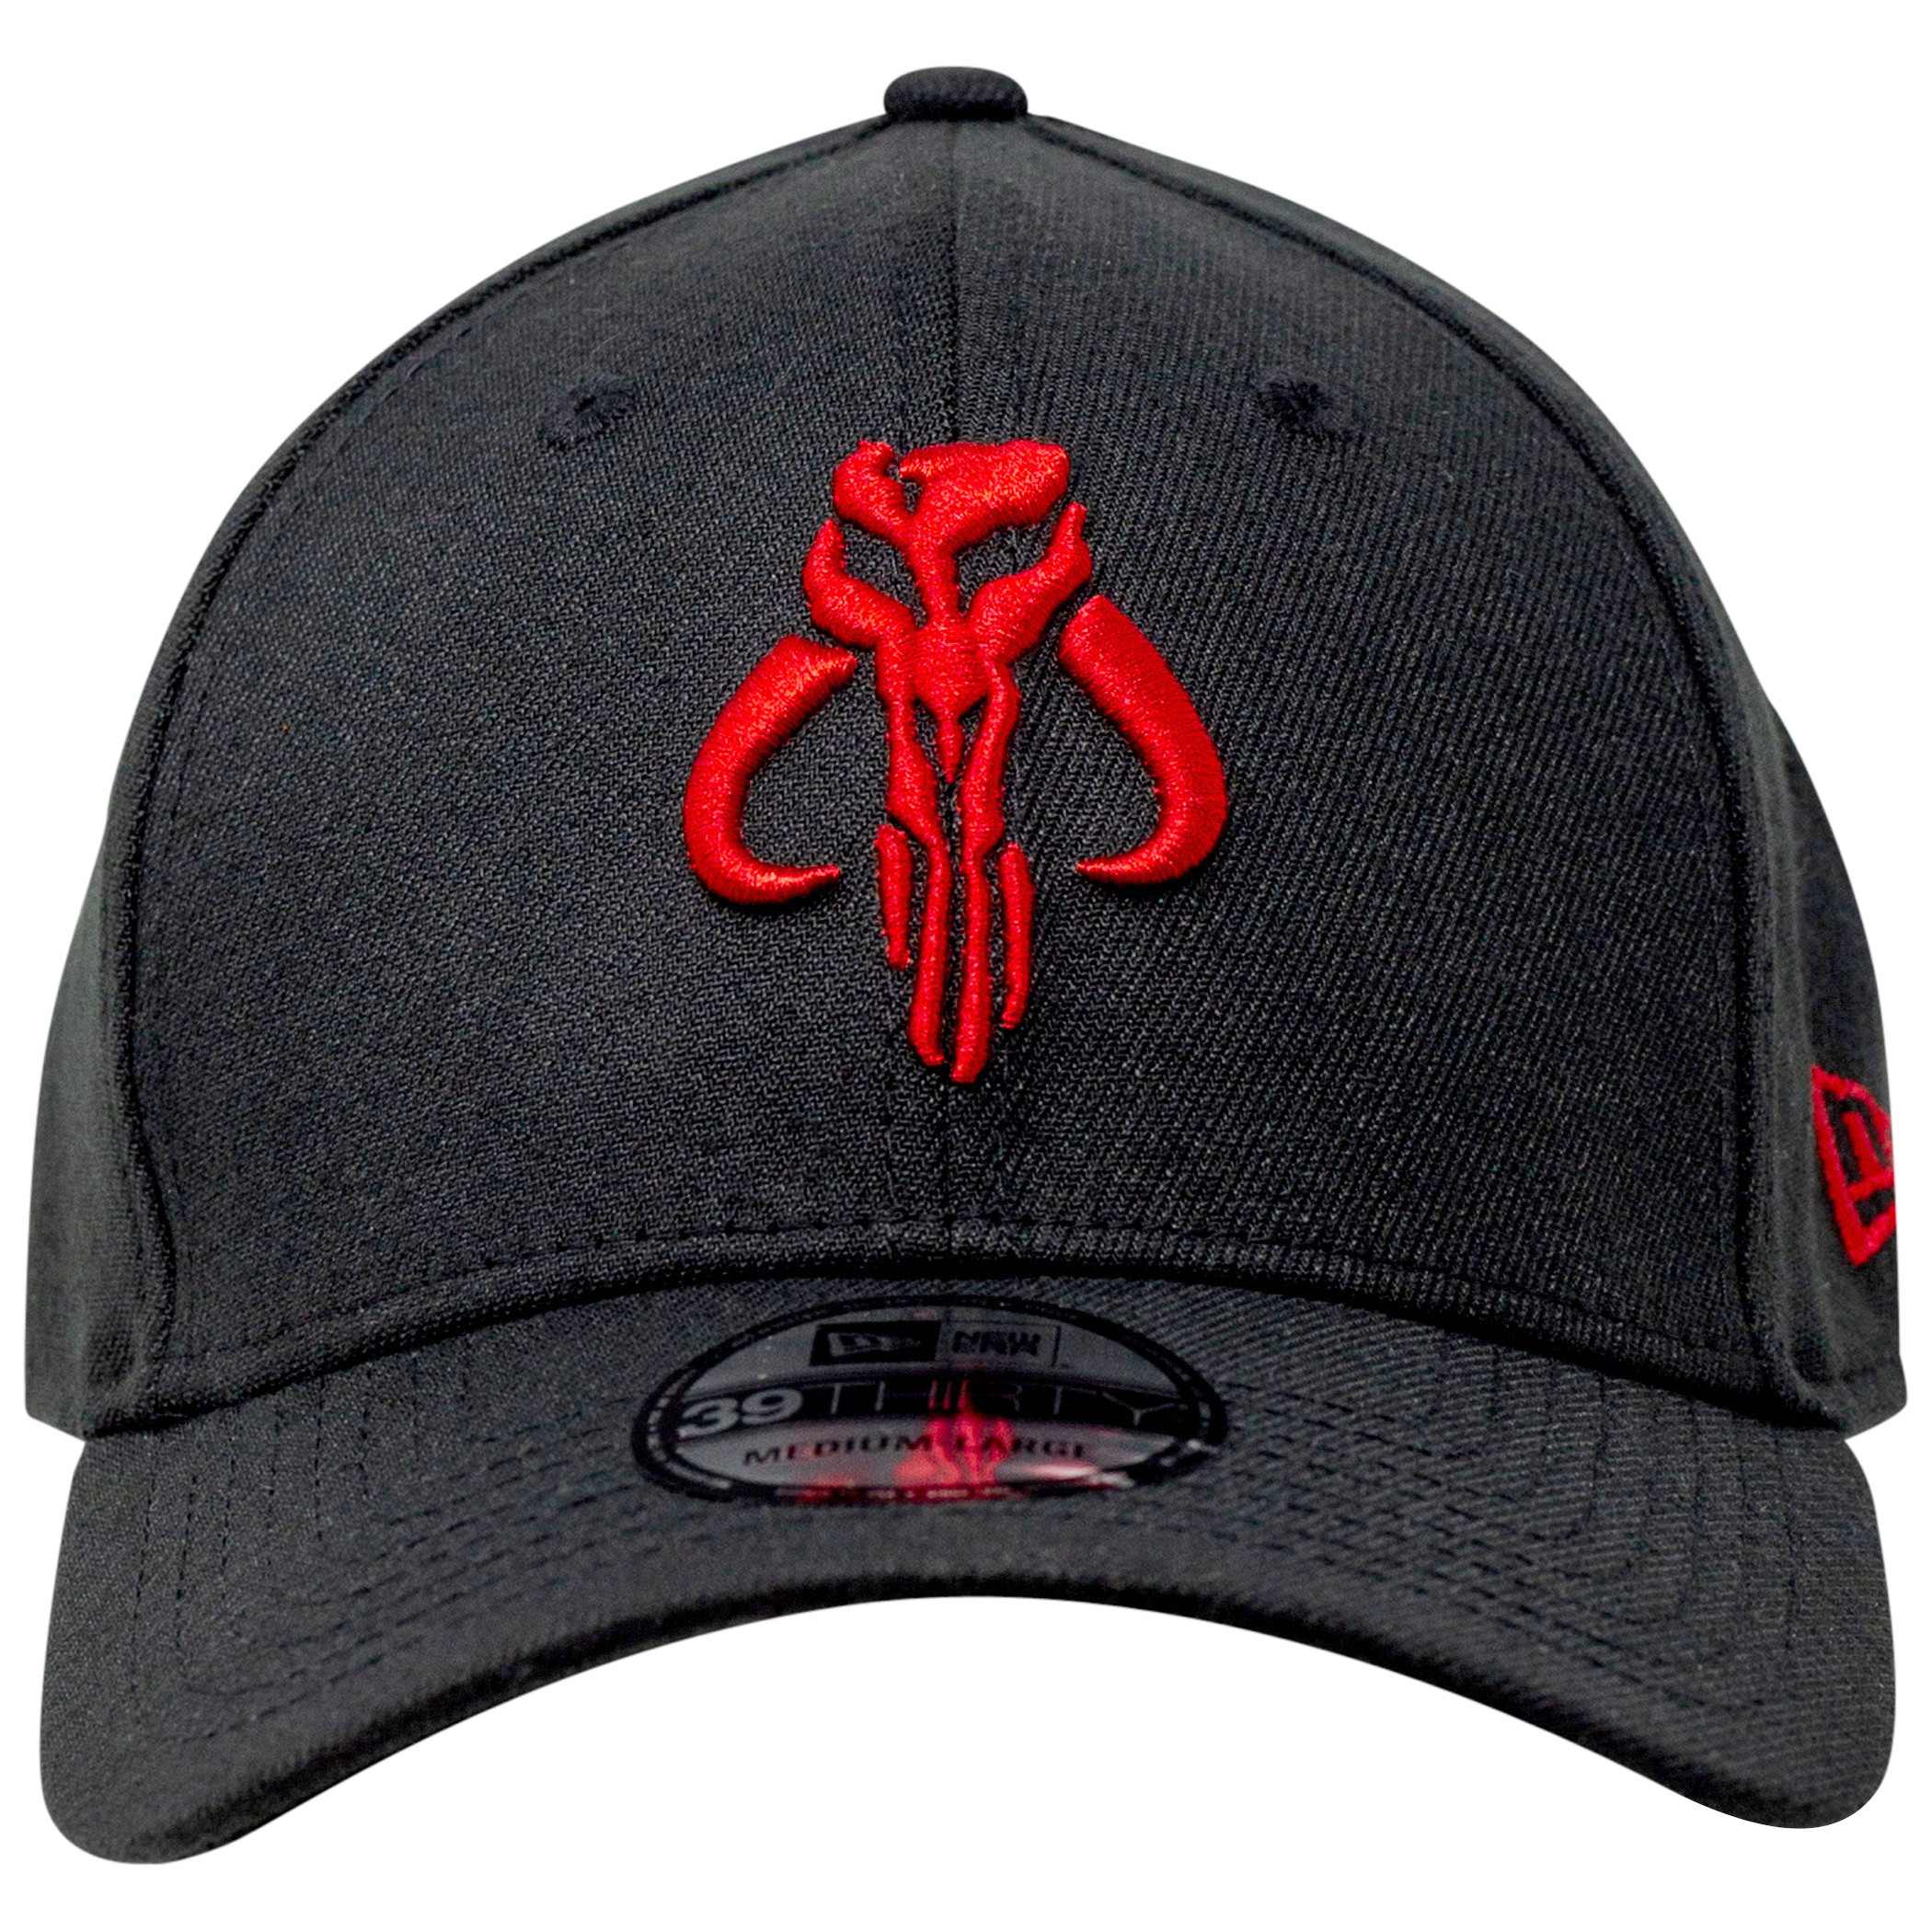 Star Wars The Mandalorian Red Mythosaur New Era 39Thirty Fitted Hat